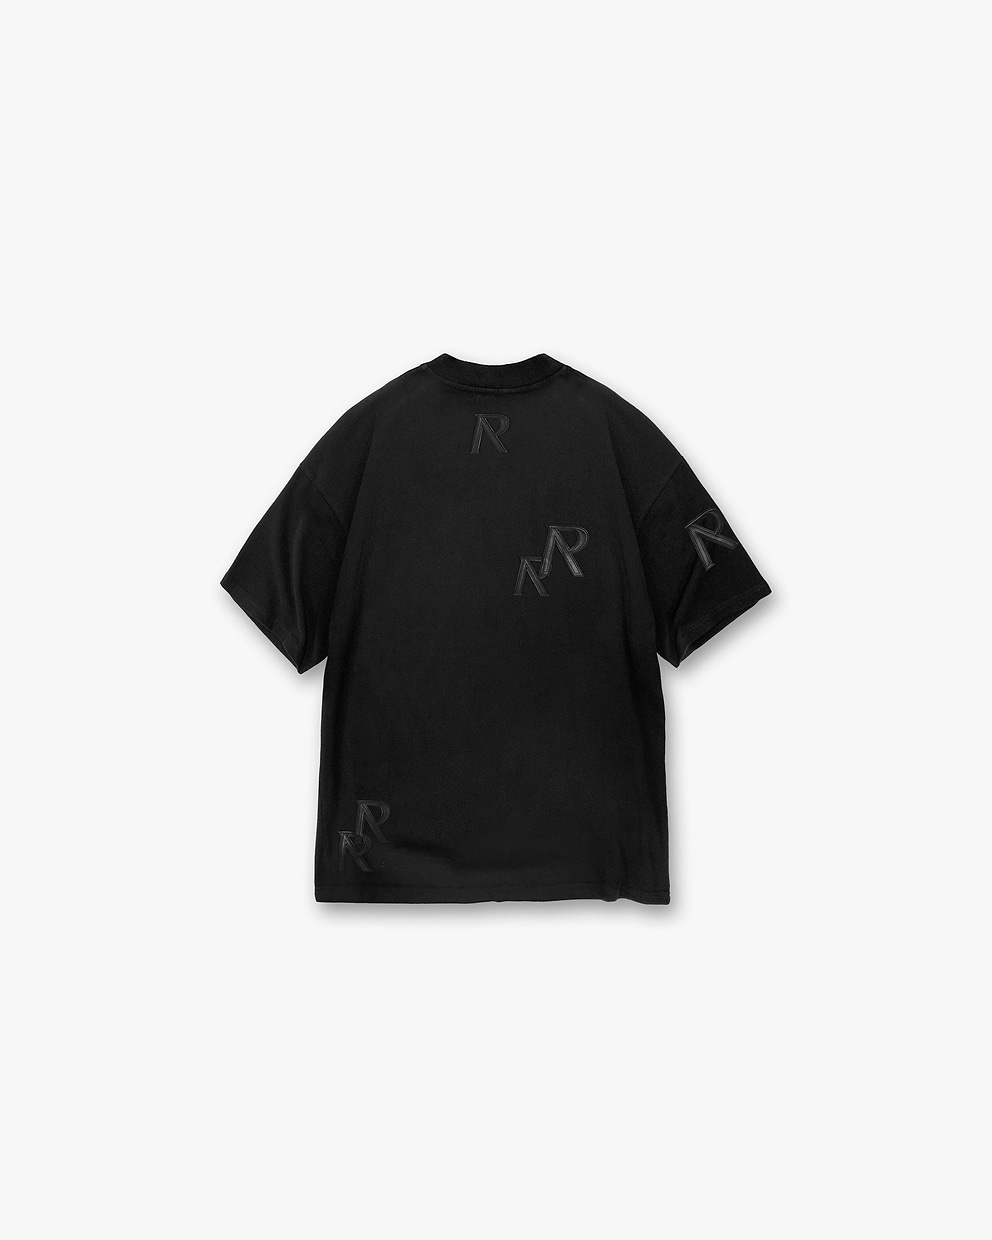 Applique Initial T-Shirt - Off Black